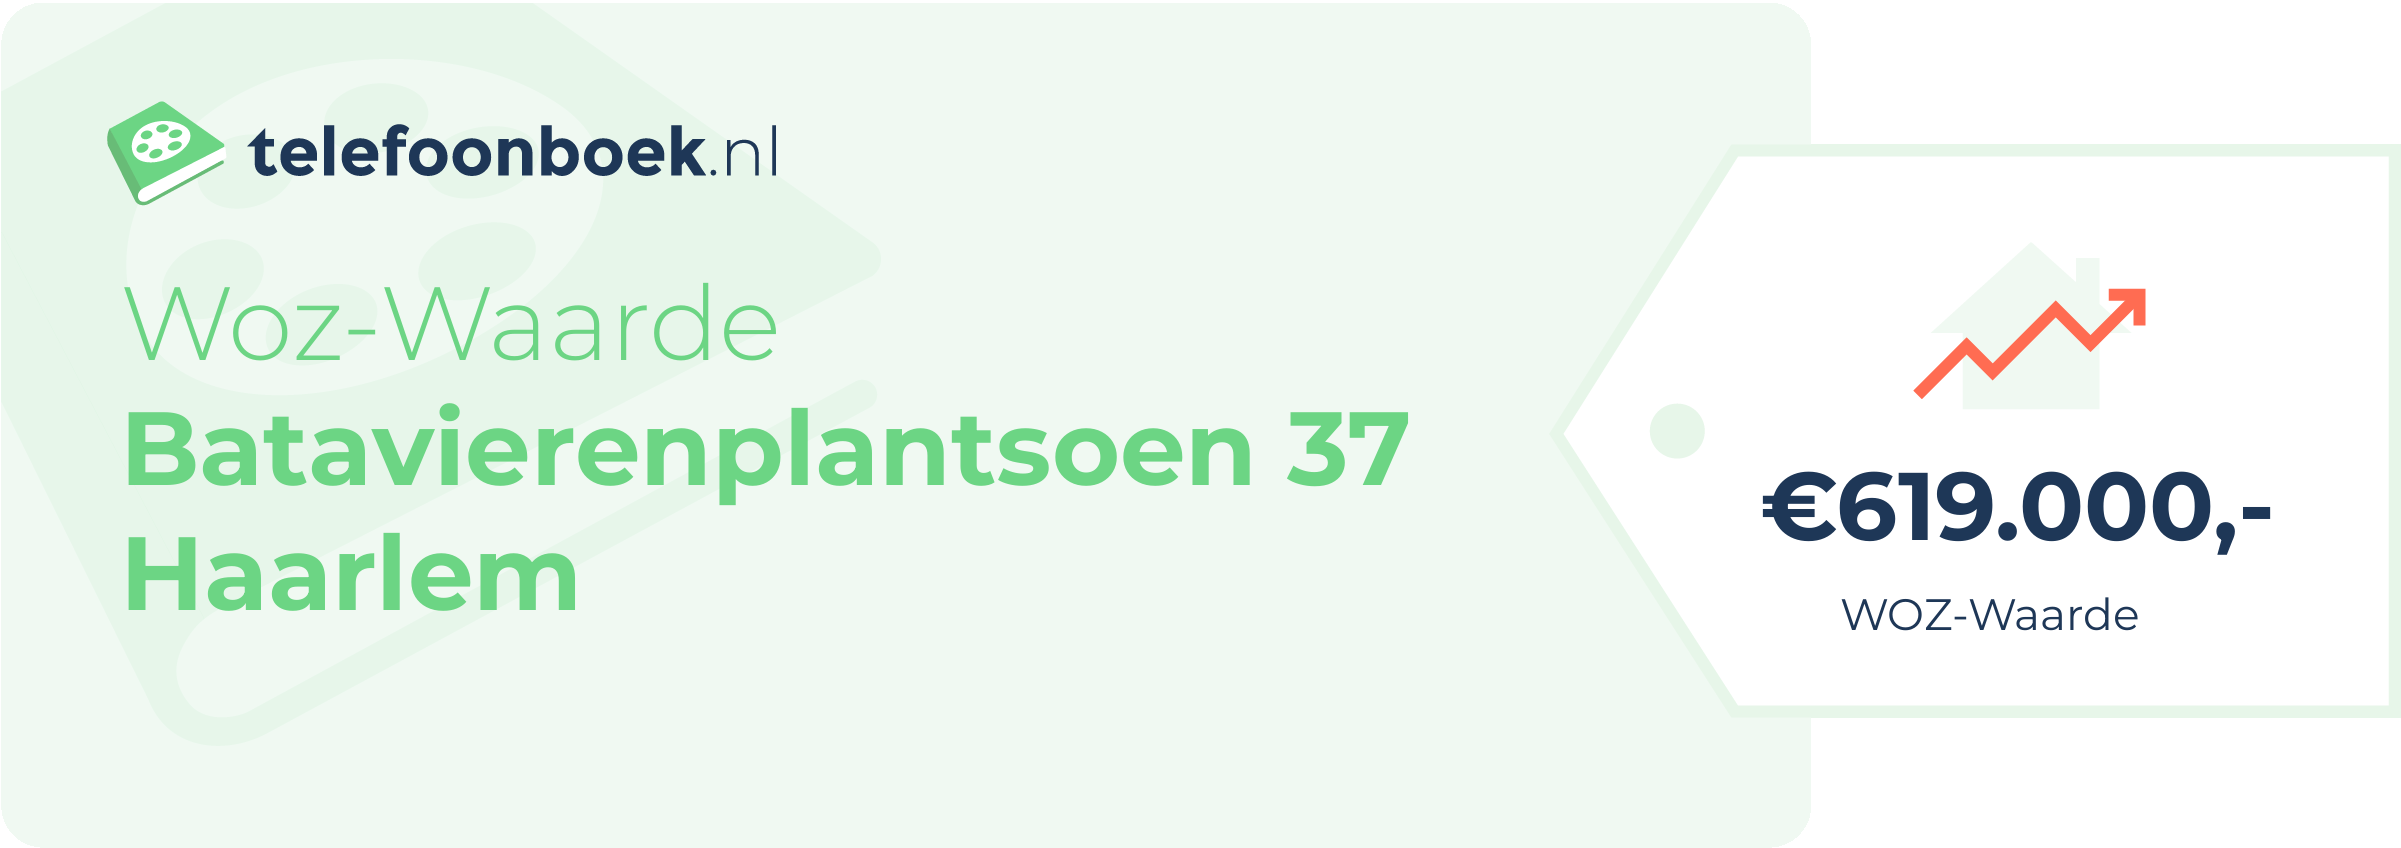 WOZ-waarde Batavierenplantsoen 37 Haarlem